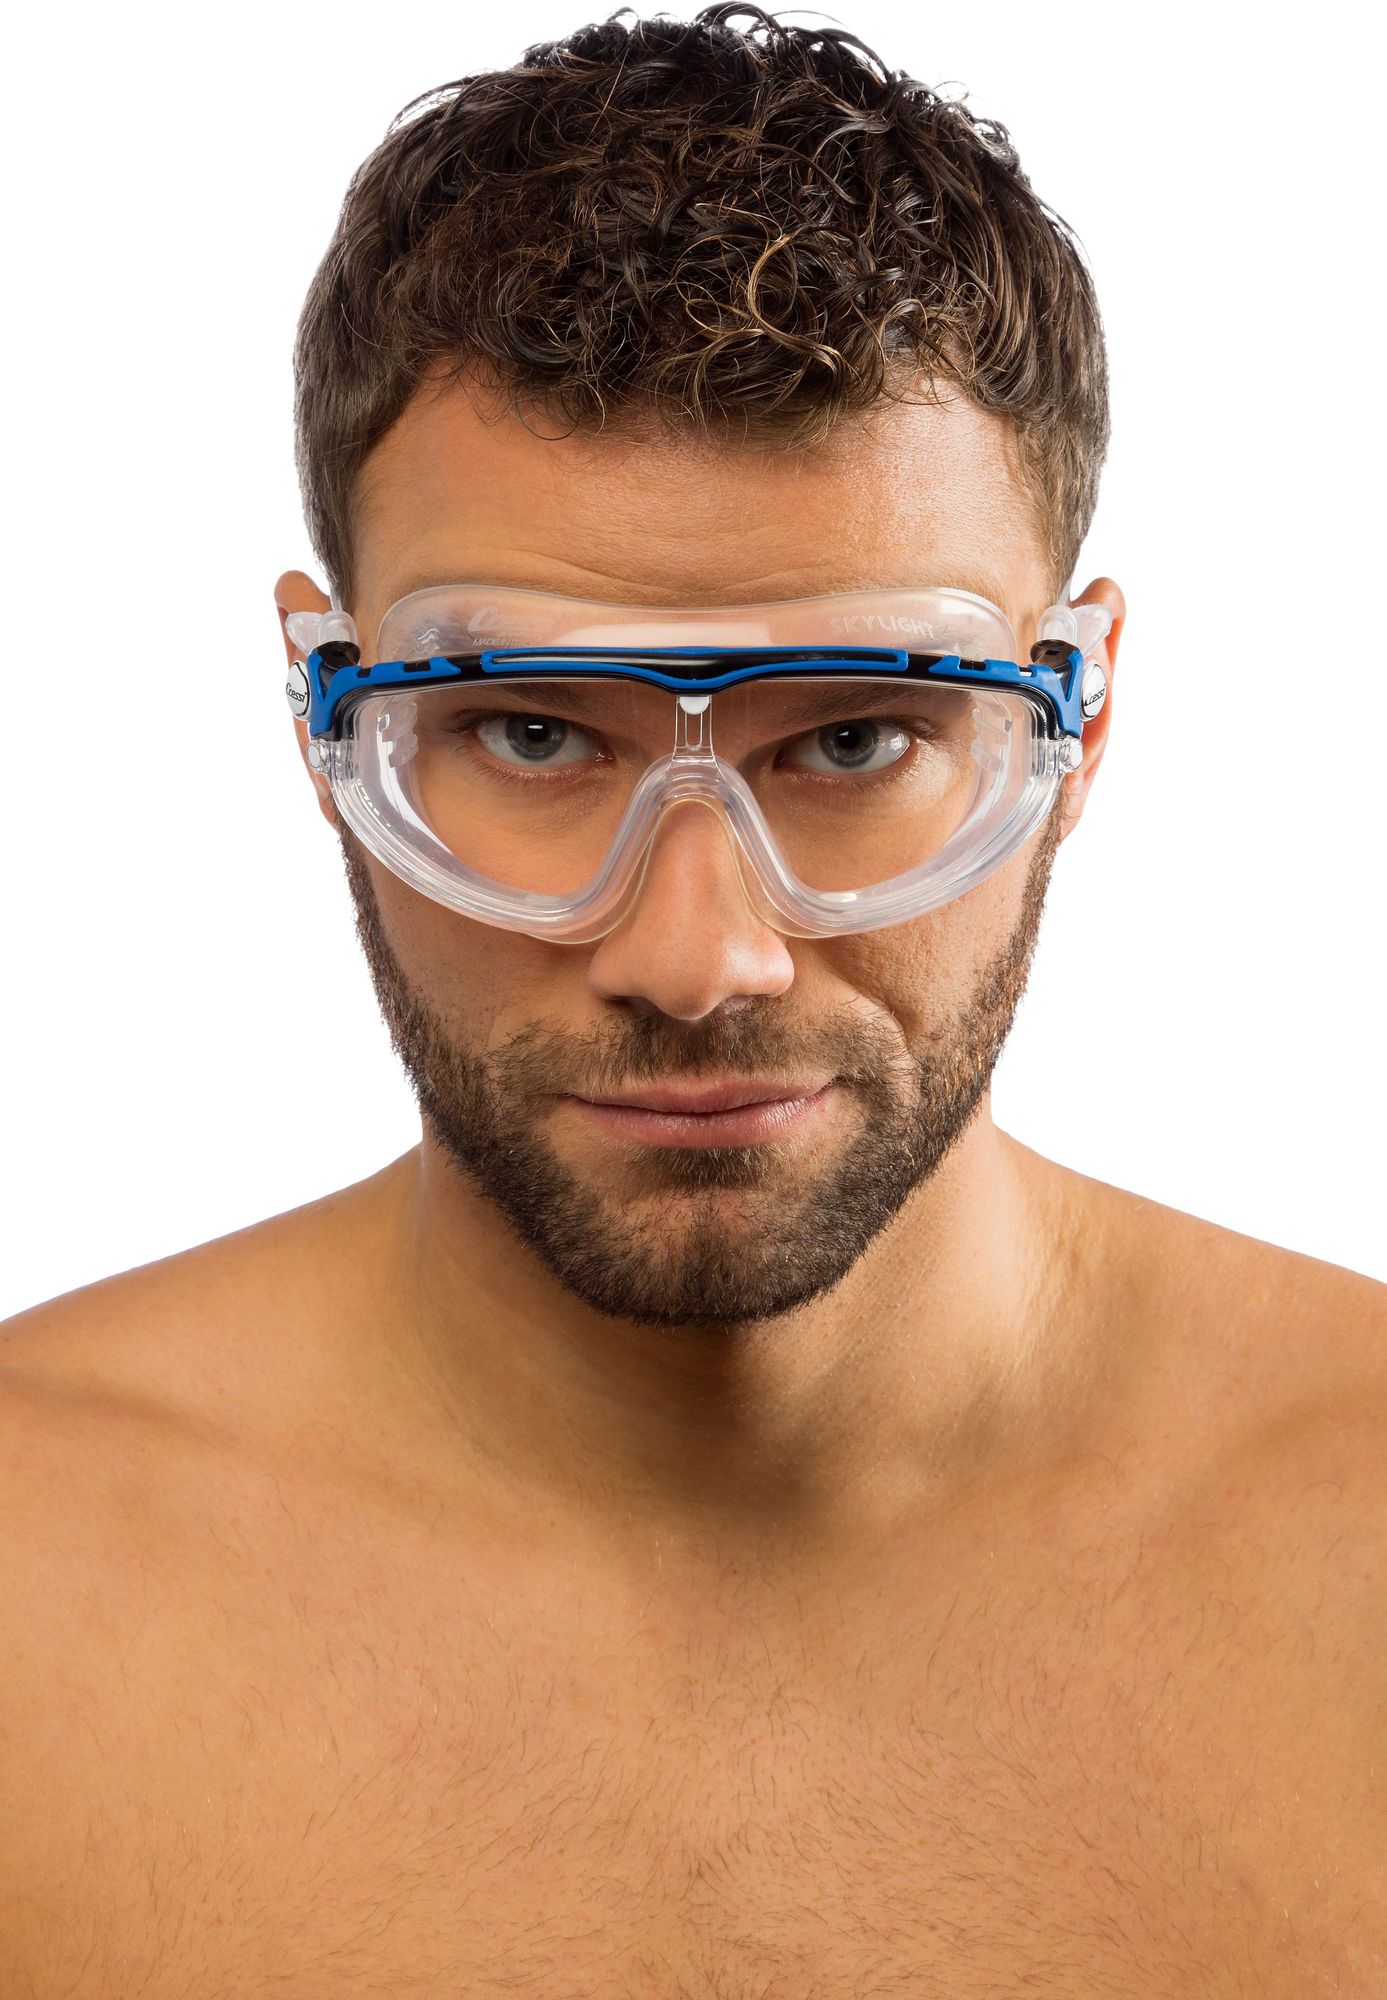 Skylight Silicon Swimming Goggles